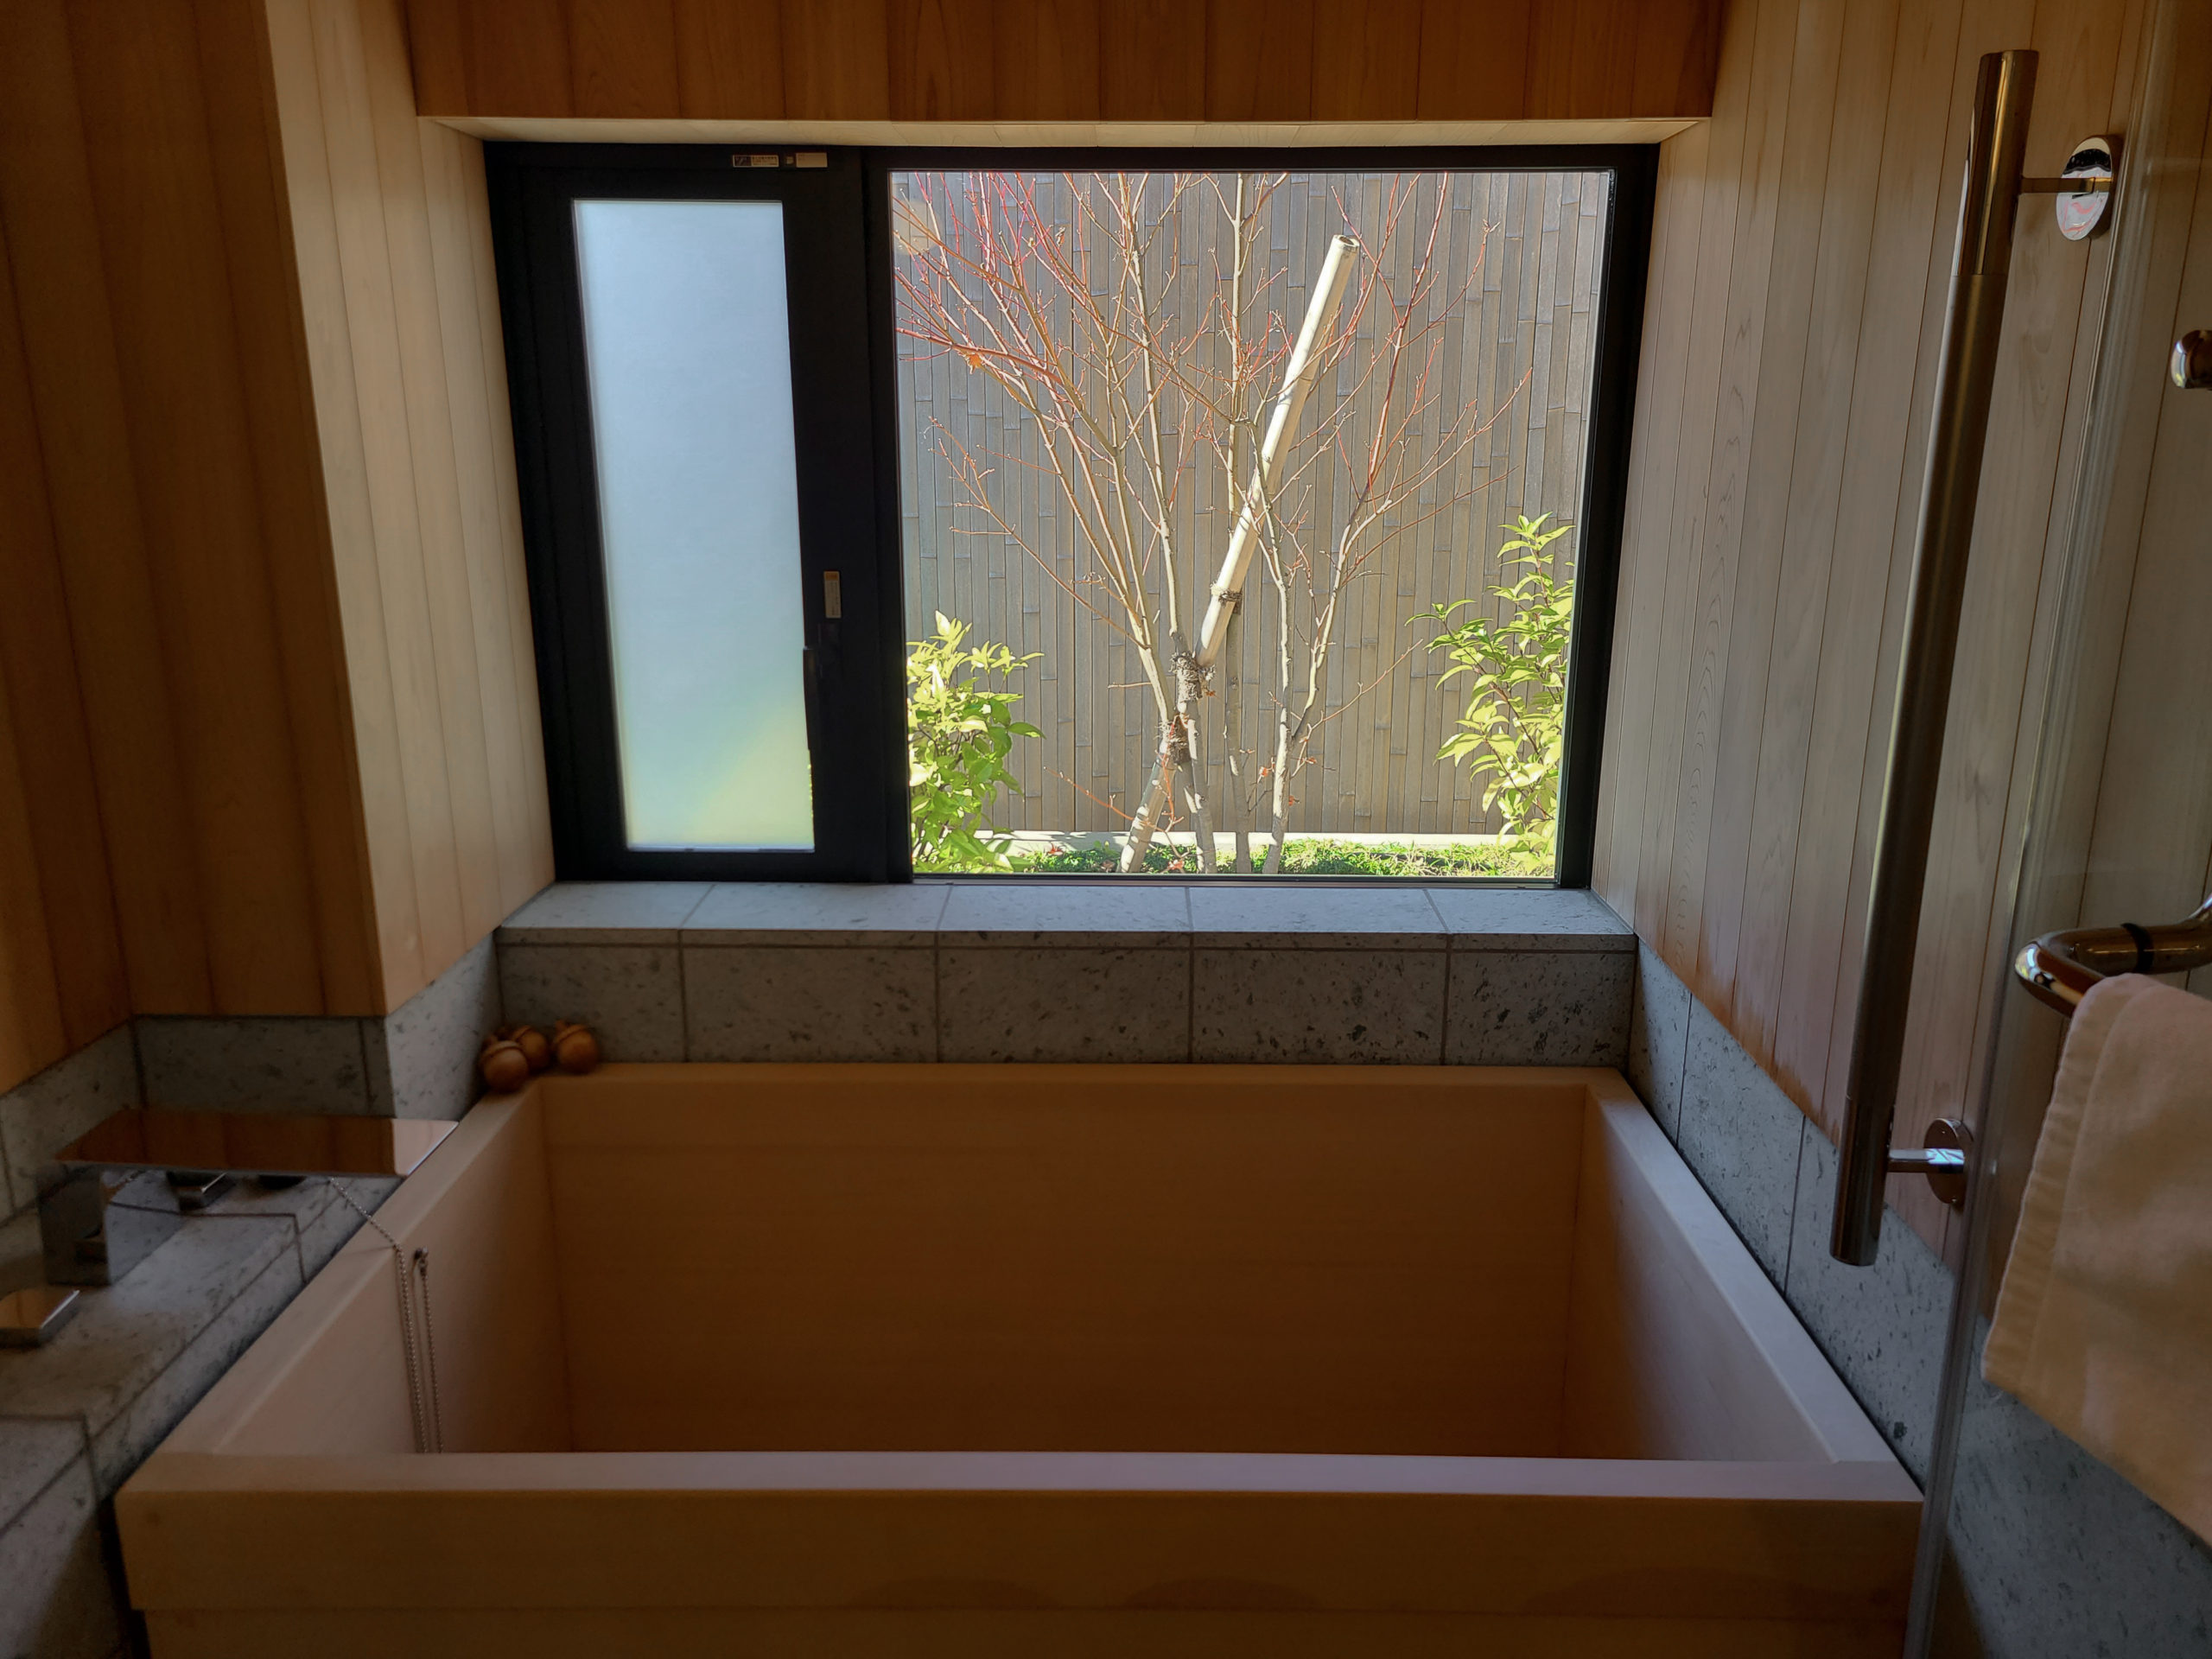 Sakura, along with Seigaiha on the 6th floor even boast private hinoki bathtubs.